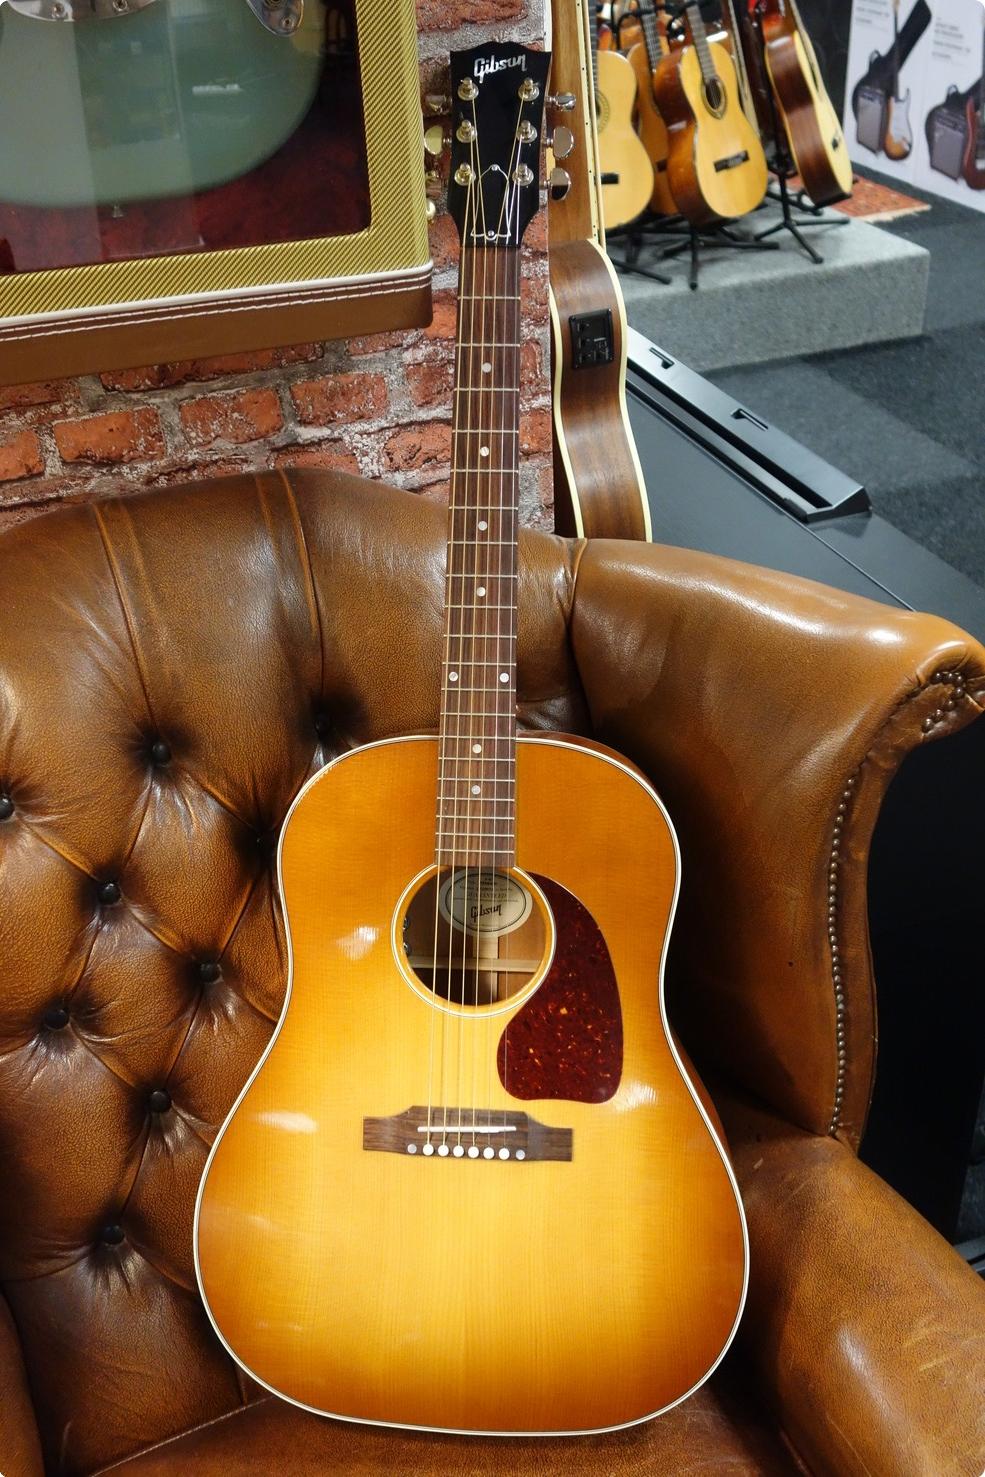 Gibson J45 Standard 19 Heritage Cherry Sunburst Guitar For Sale Dirk Witte